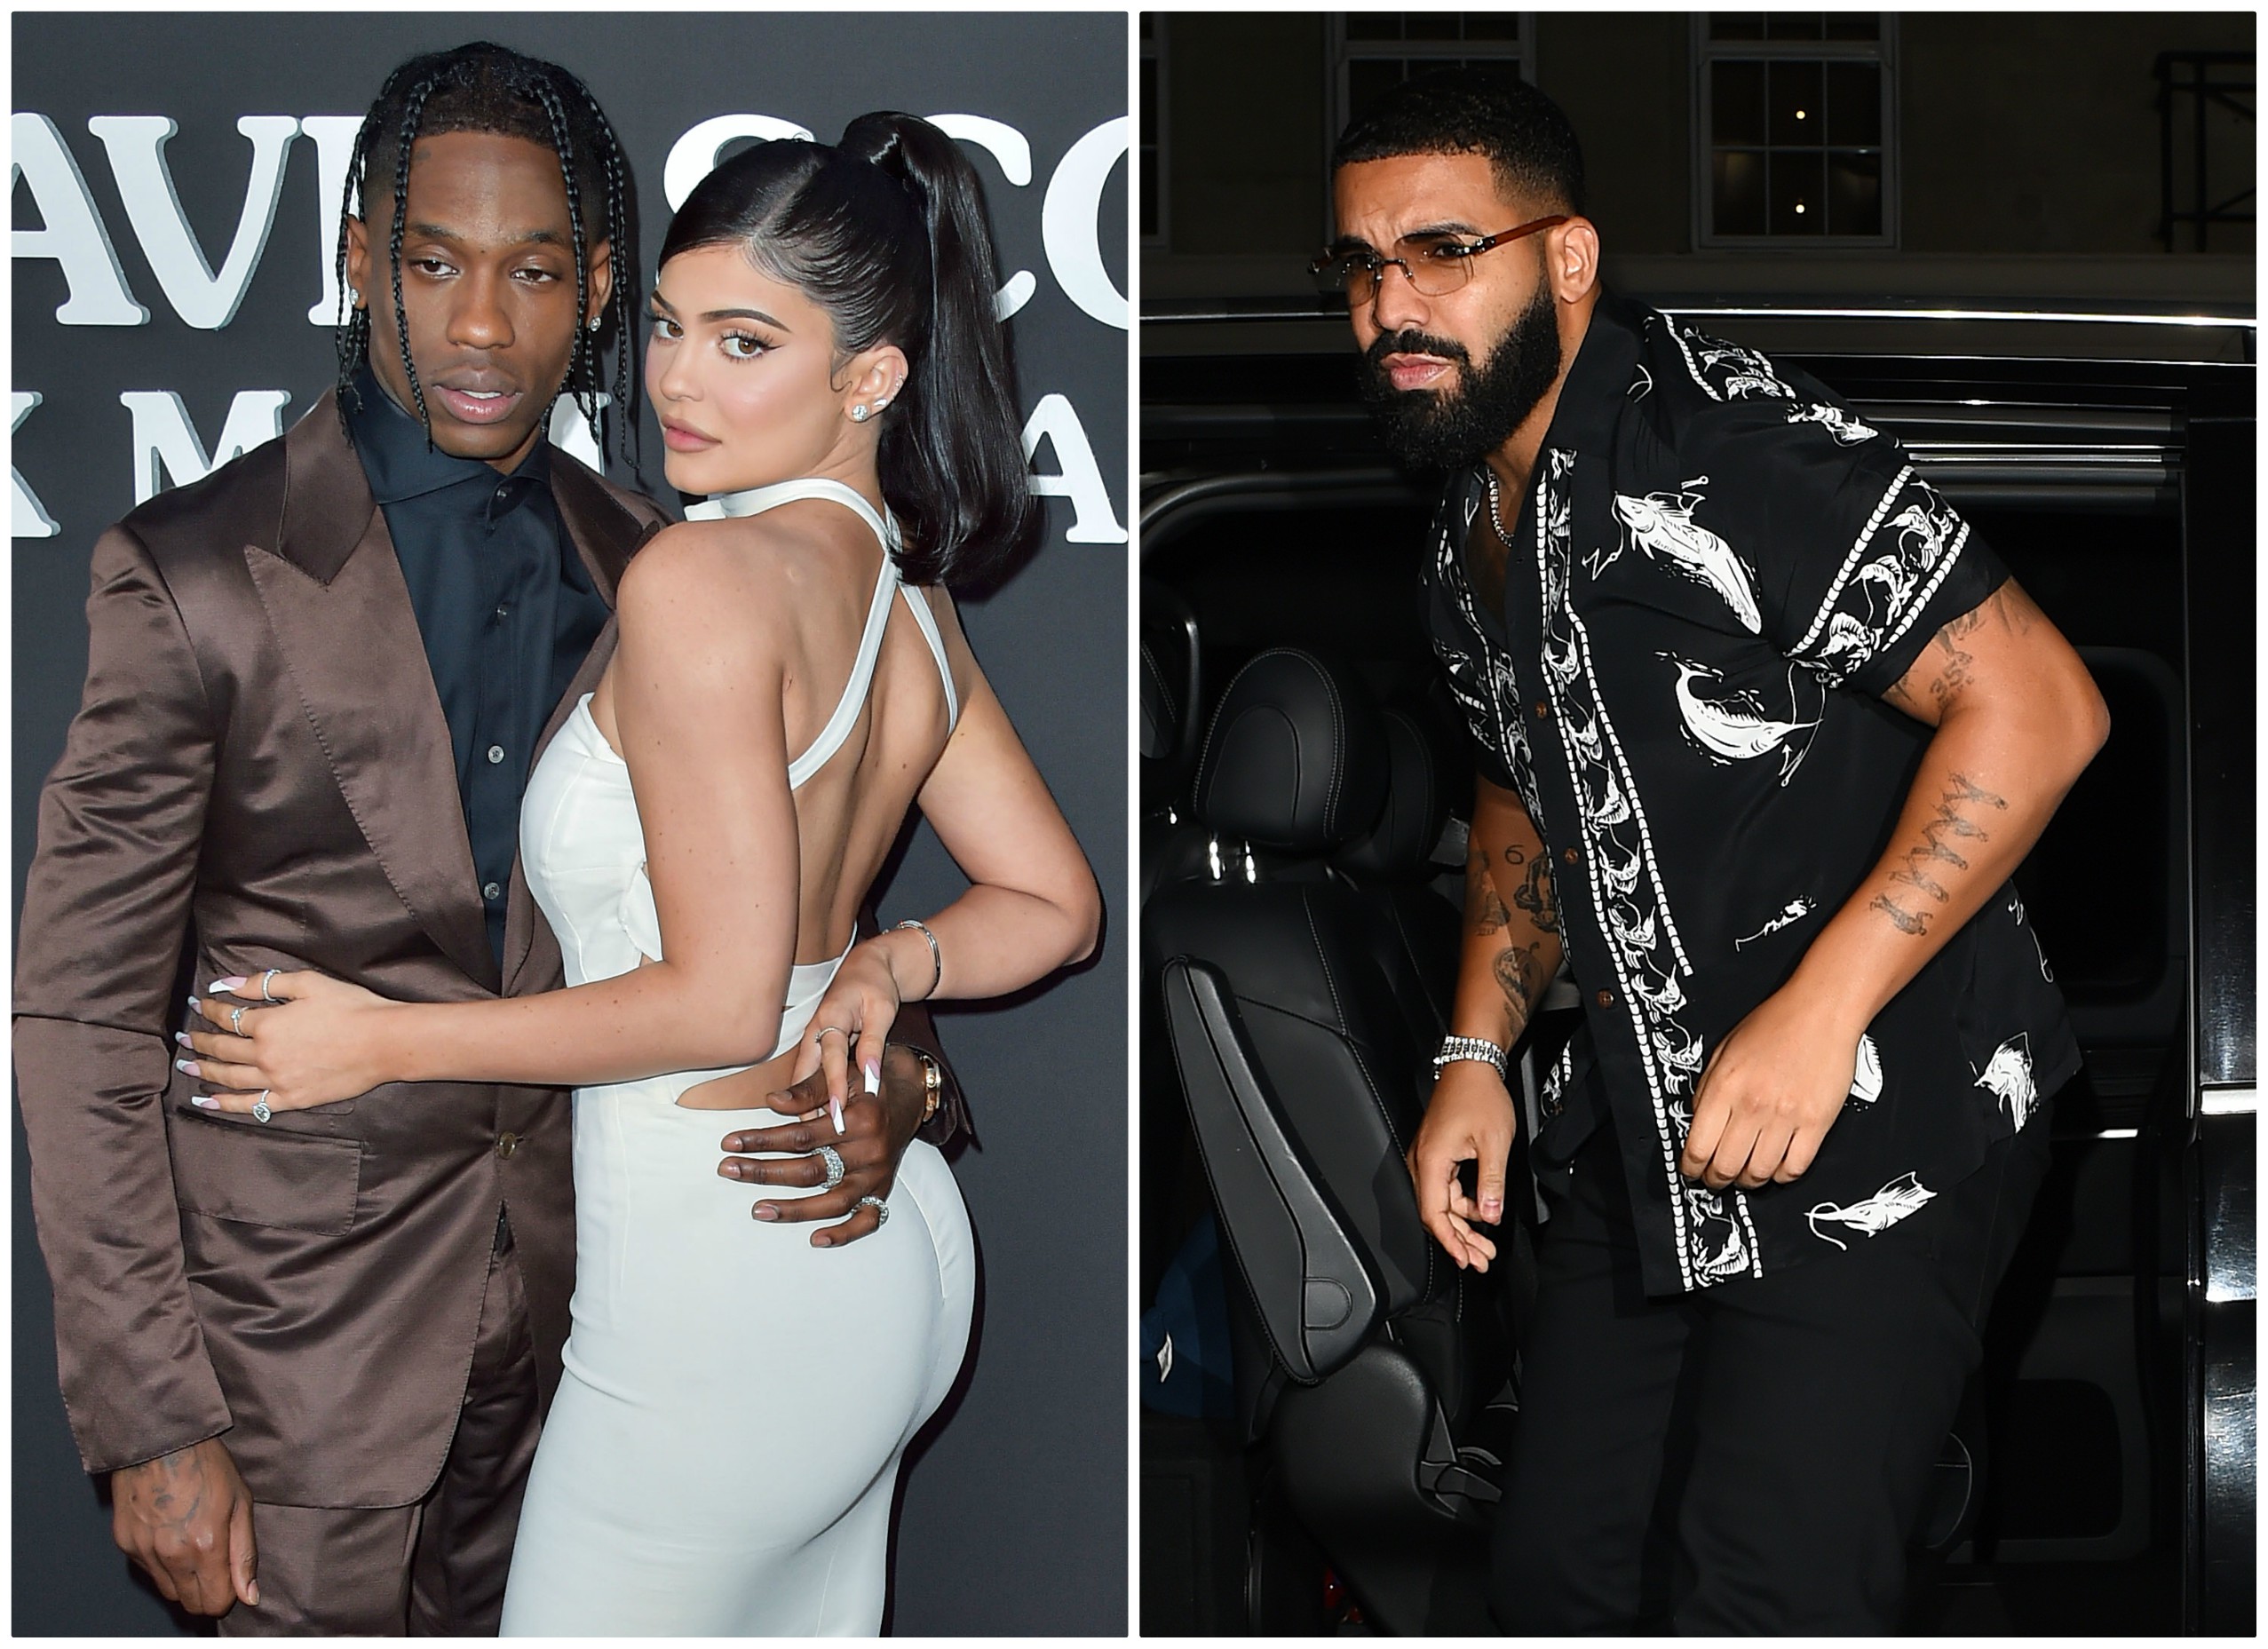 Jordyn Woods' Copycat Feud With Kylie Jenner Revealed In 7 Photos